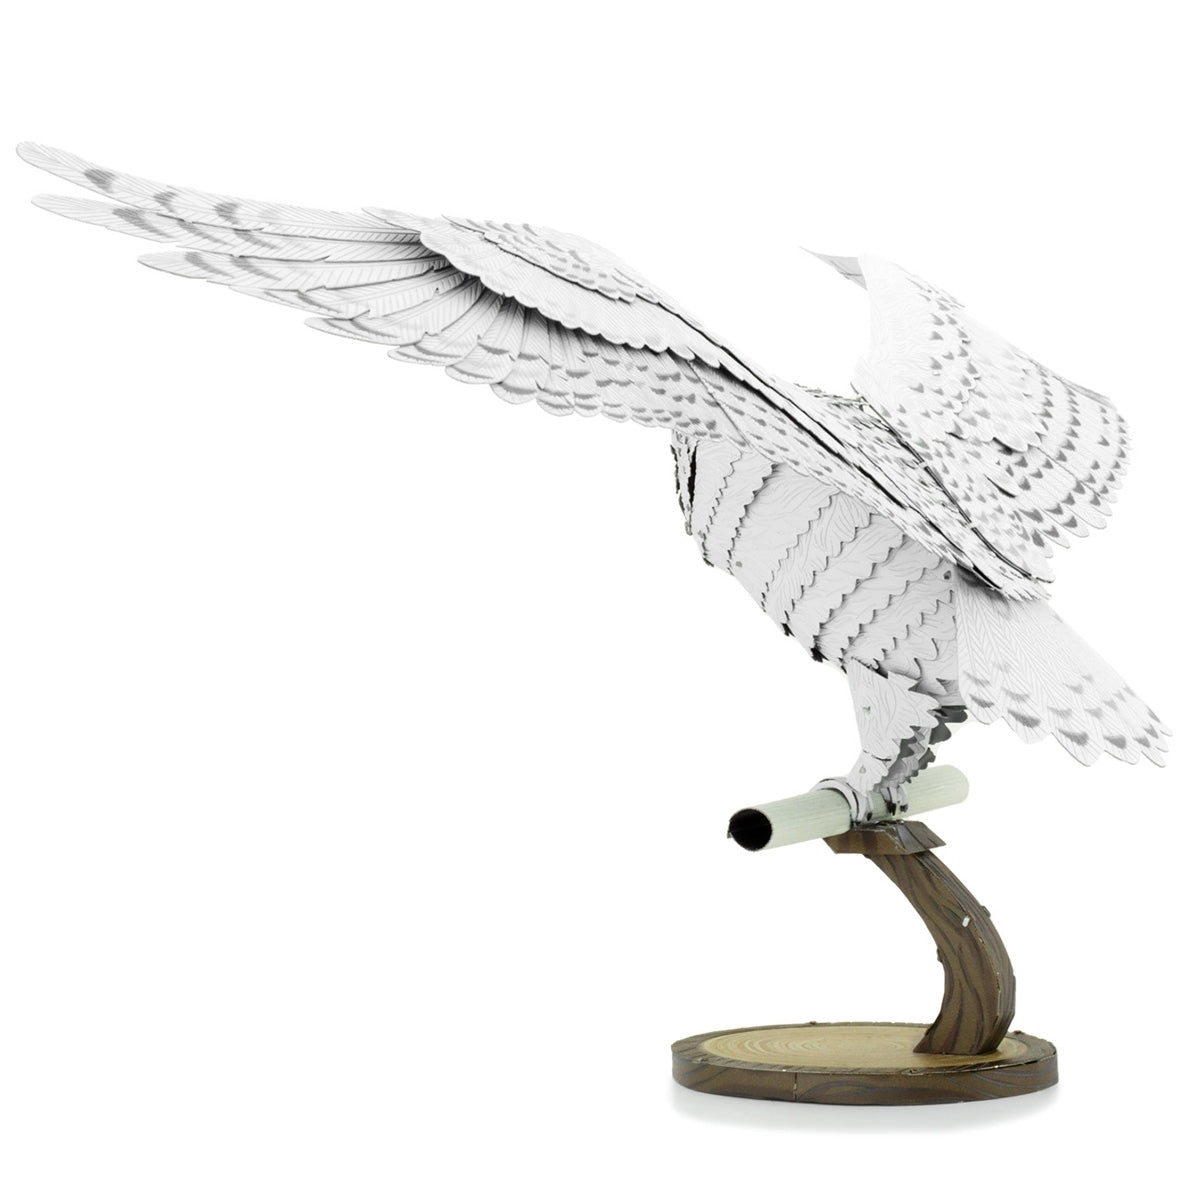 Metal Earth - Premium Series - Harry Potter: Hedwig Model Kit